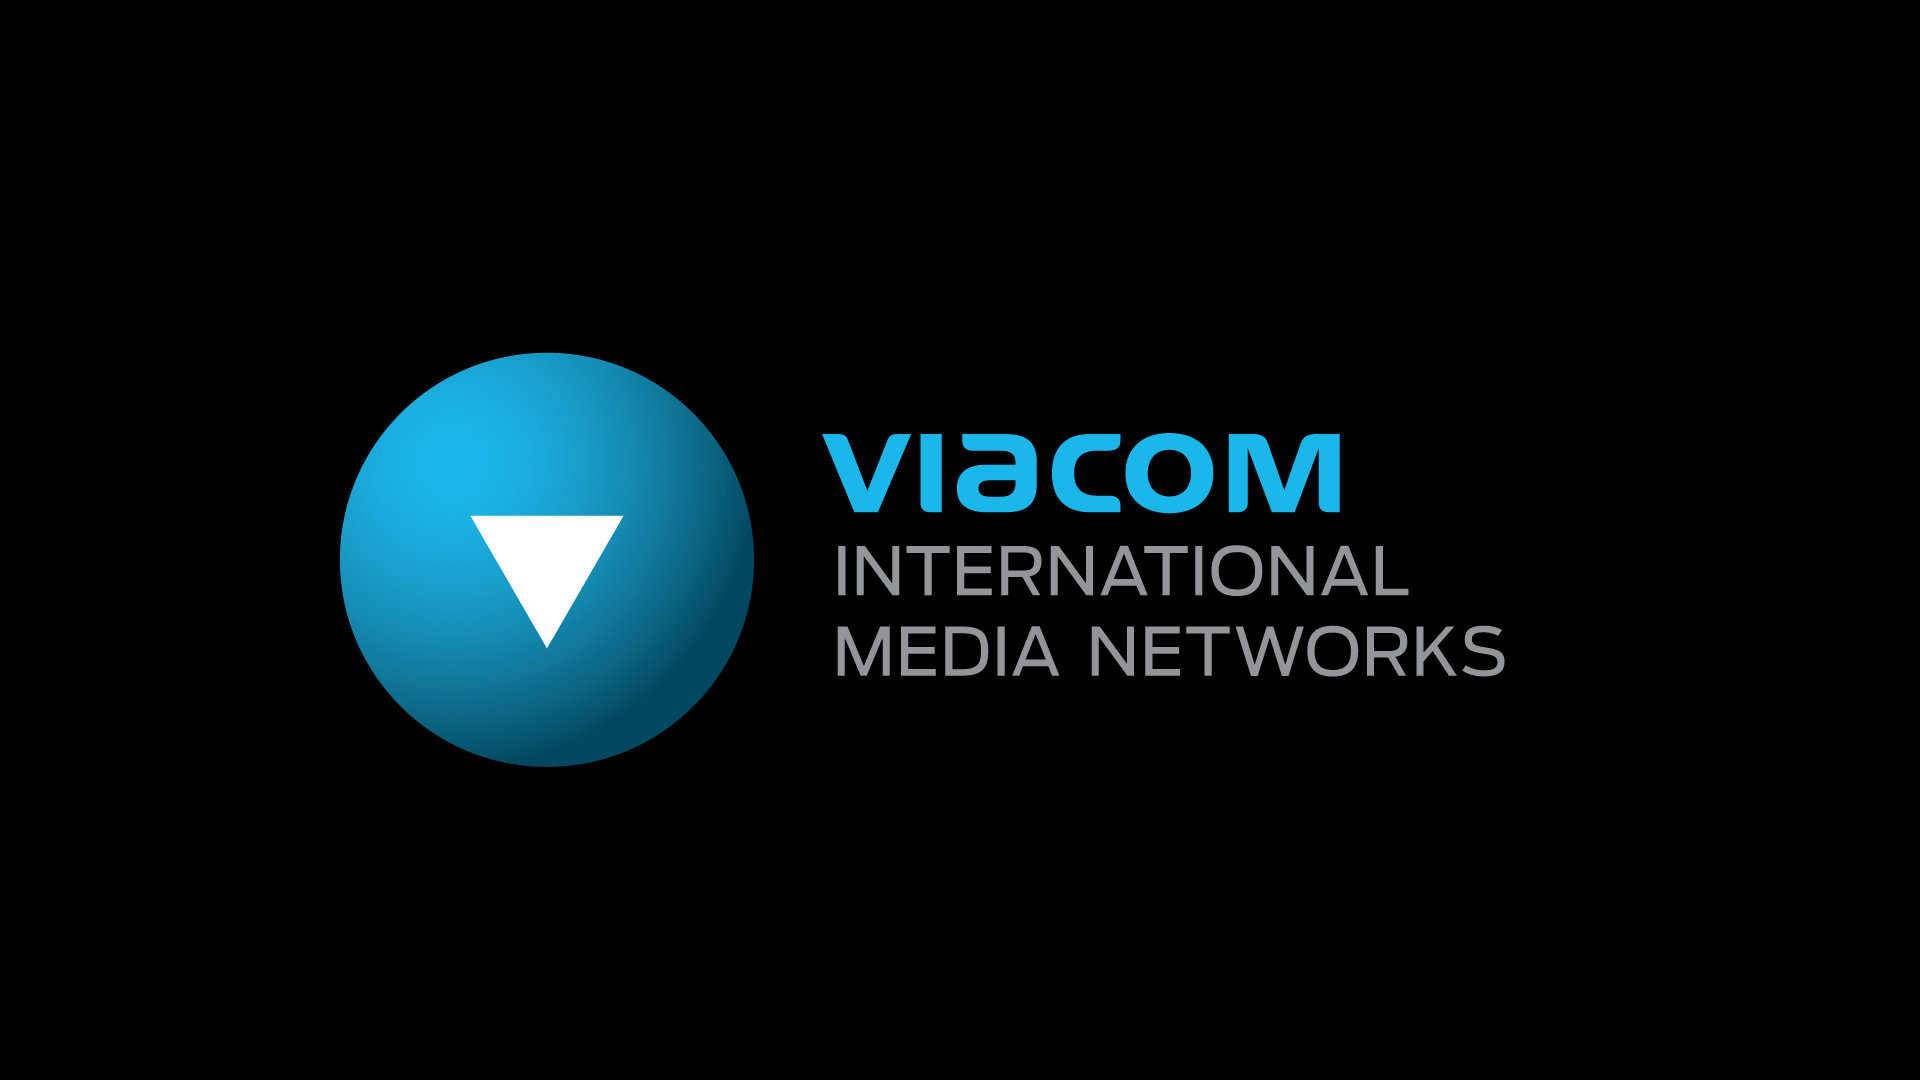 Medium int. Viacom International. Viacom Media Networks. Viacom Media Networks logo. Viacom International 2018.